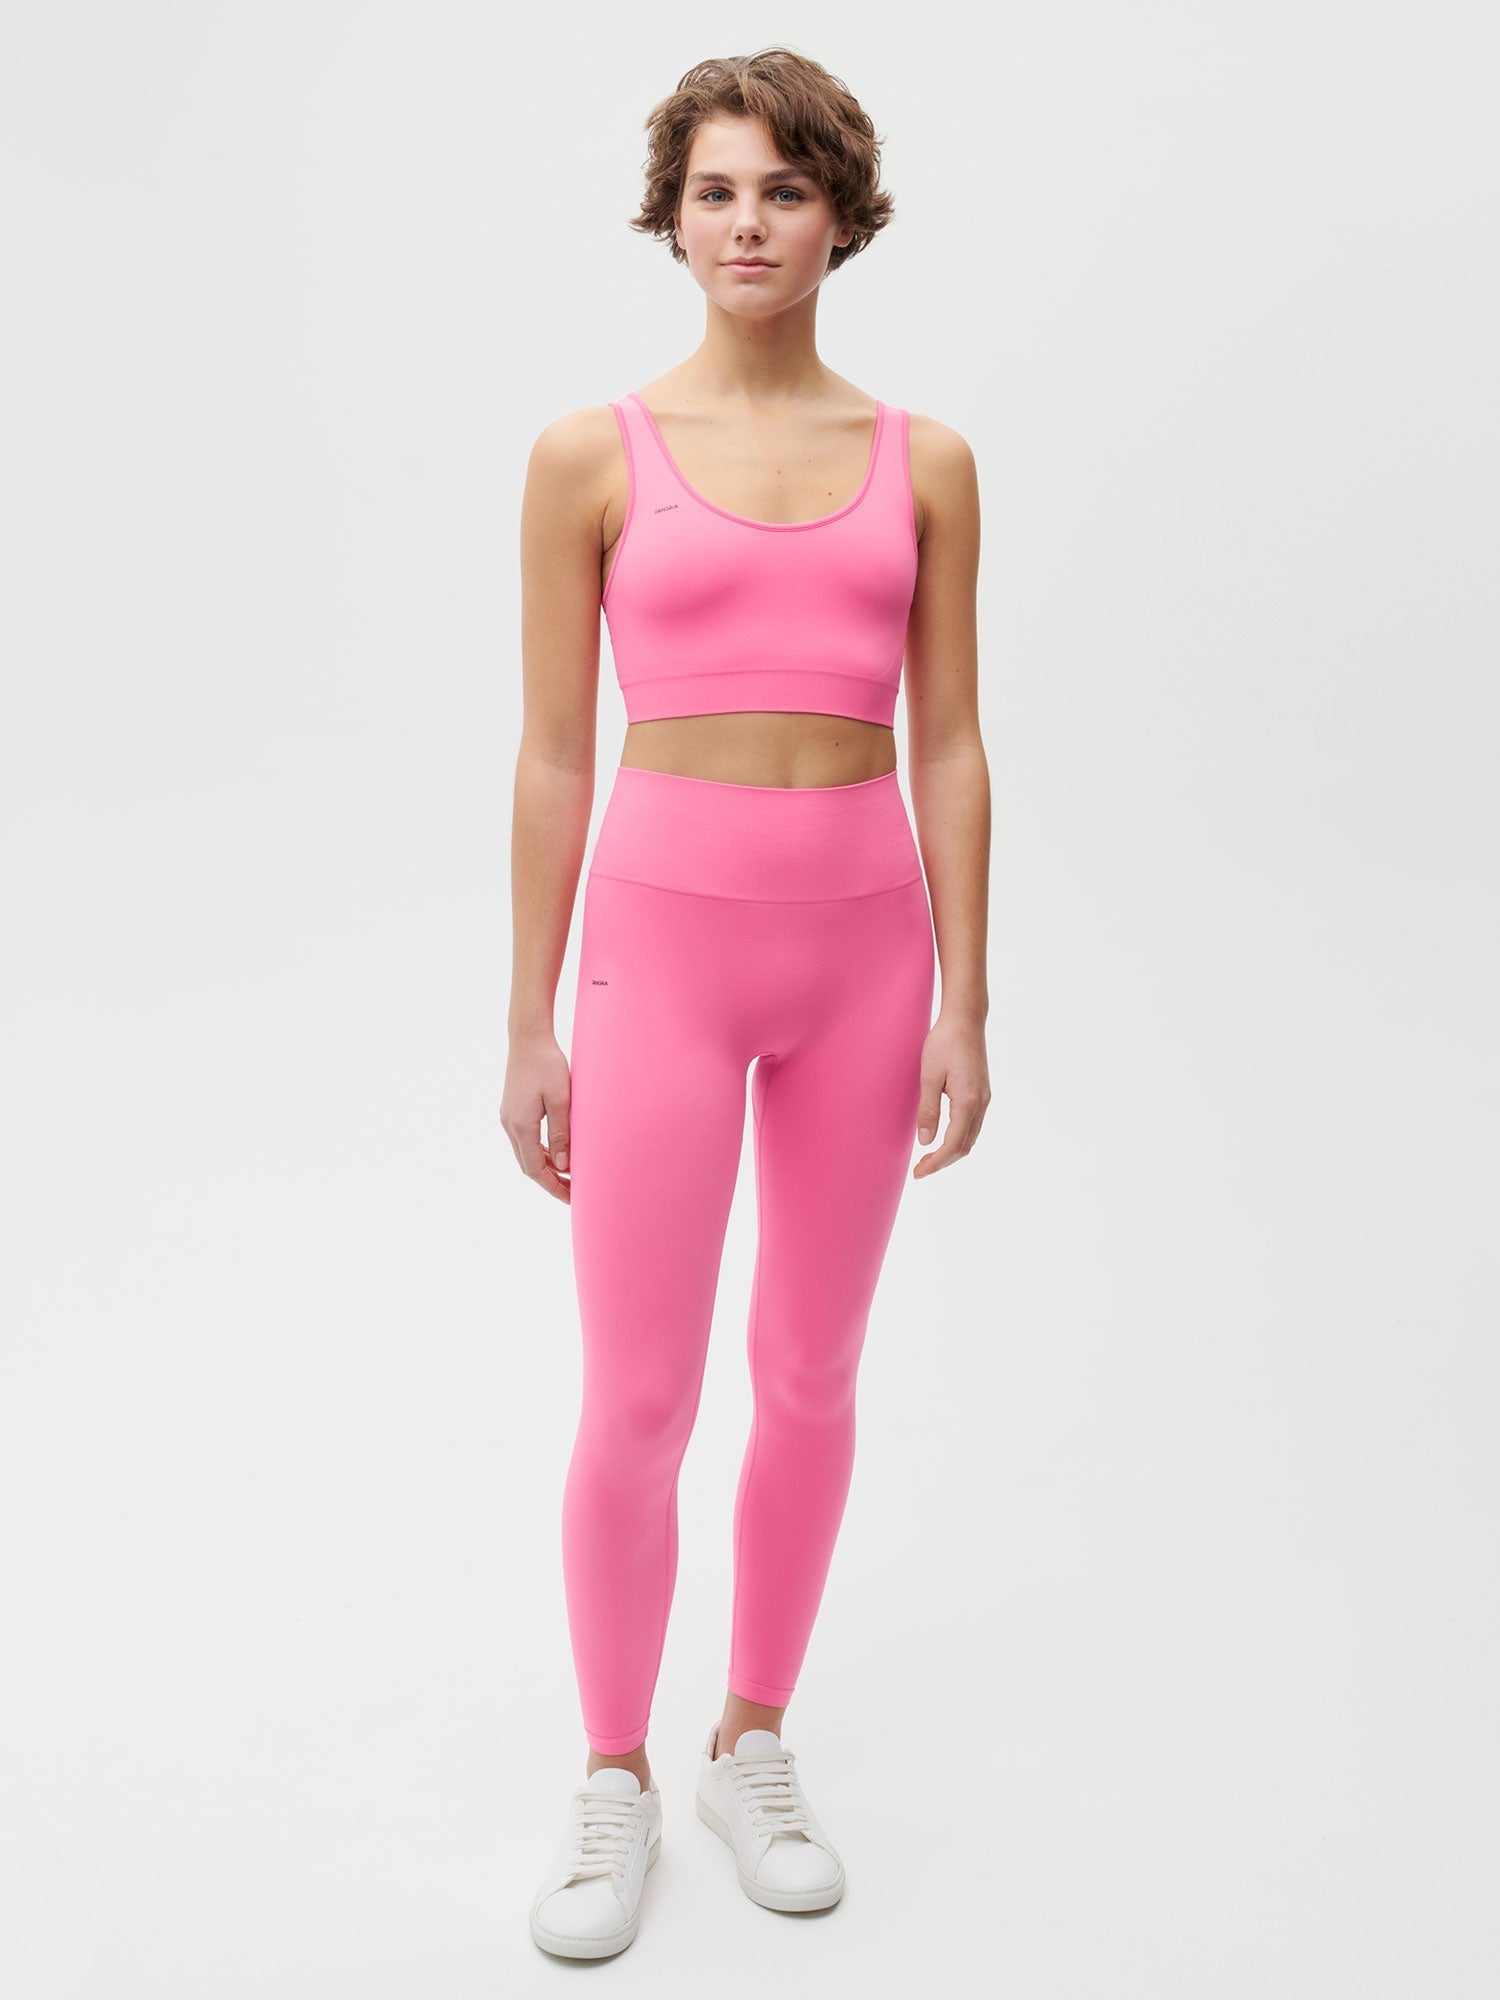 Activewear Womens Leggings Watermelon Pink 